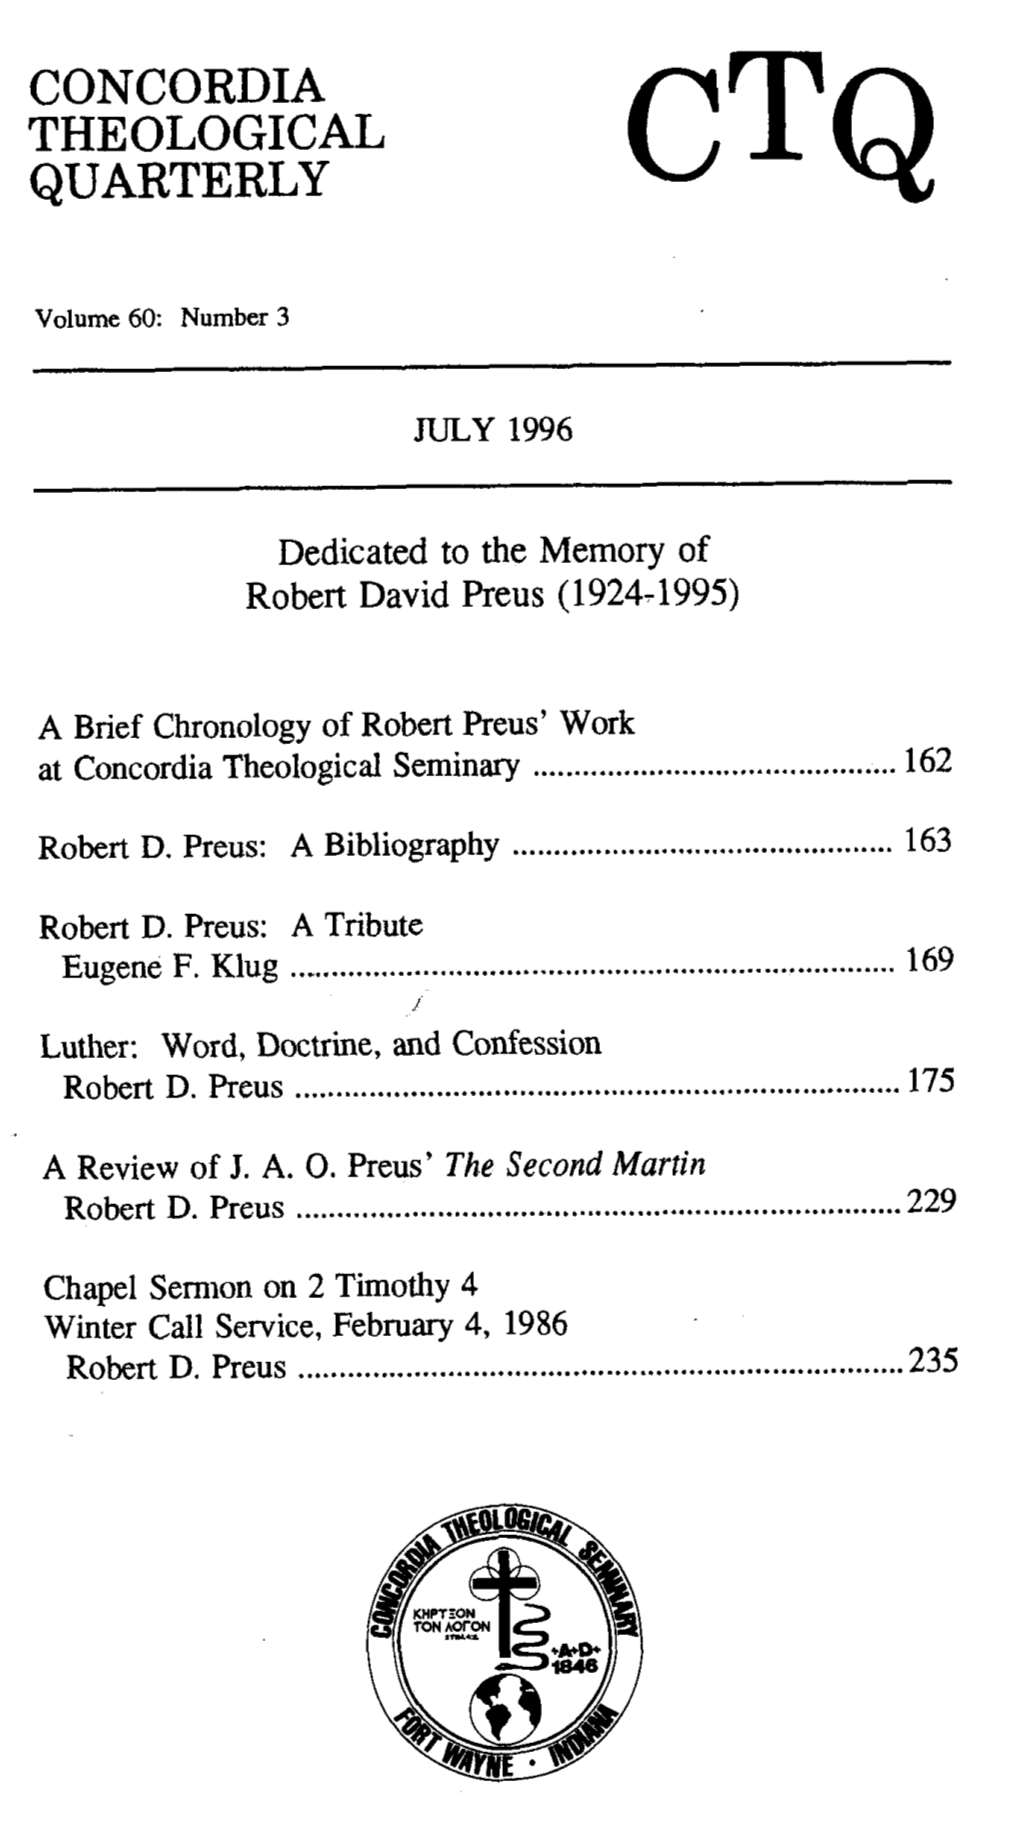 Robert D. Preus: a Bibliography